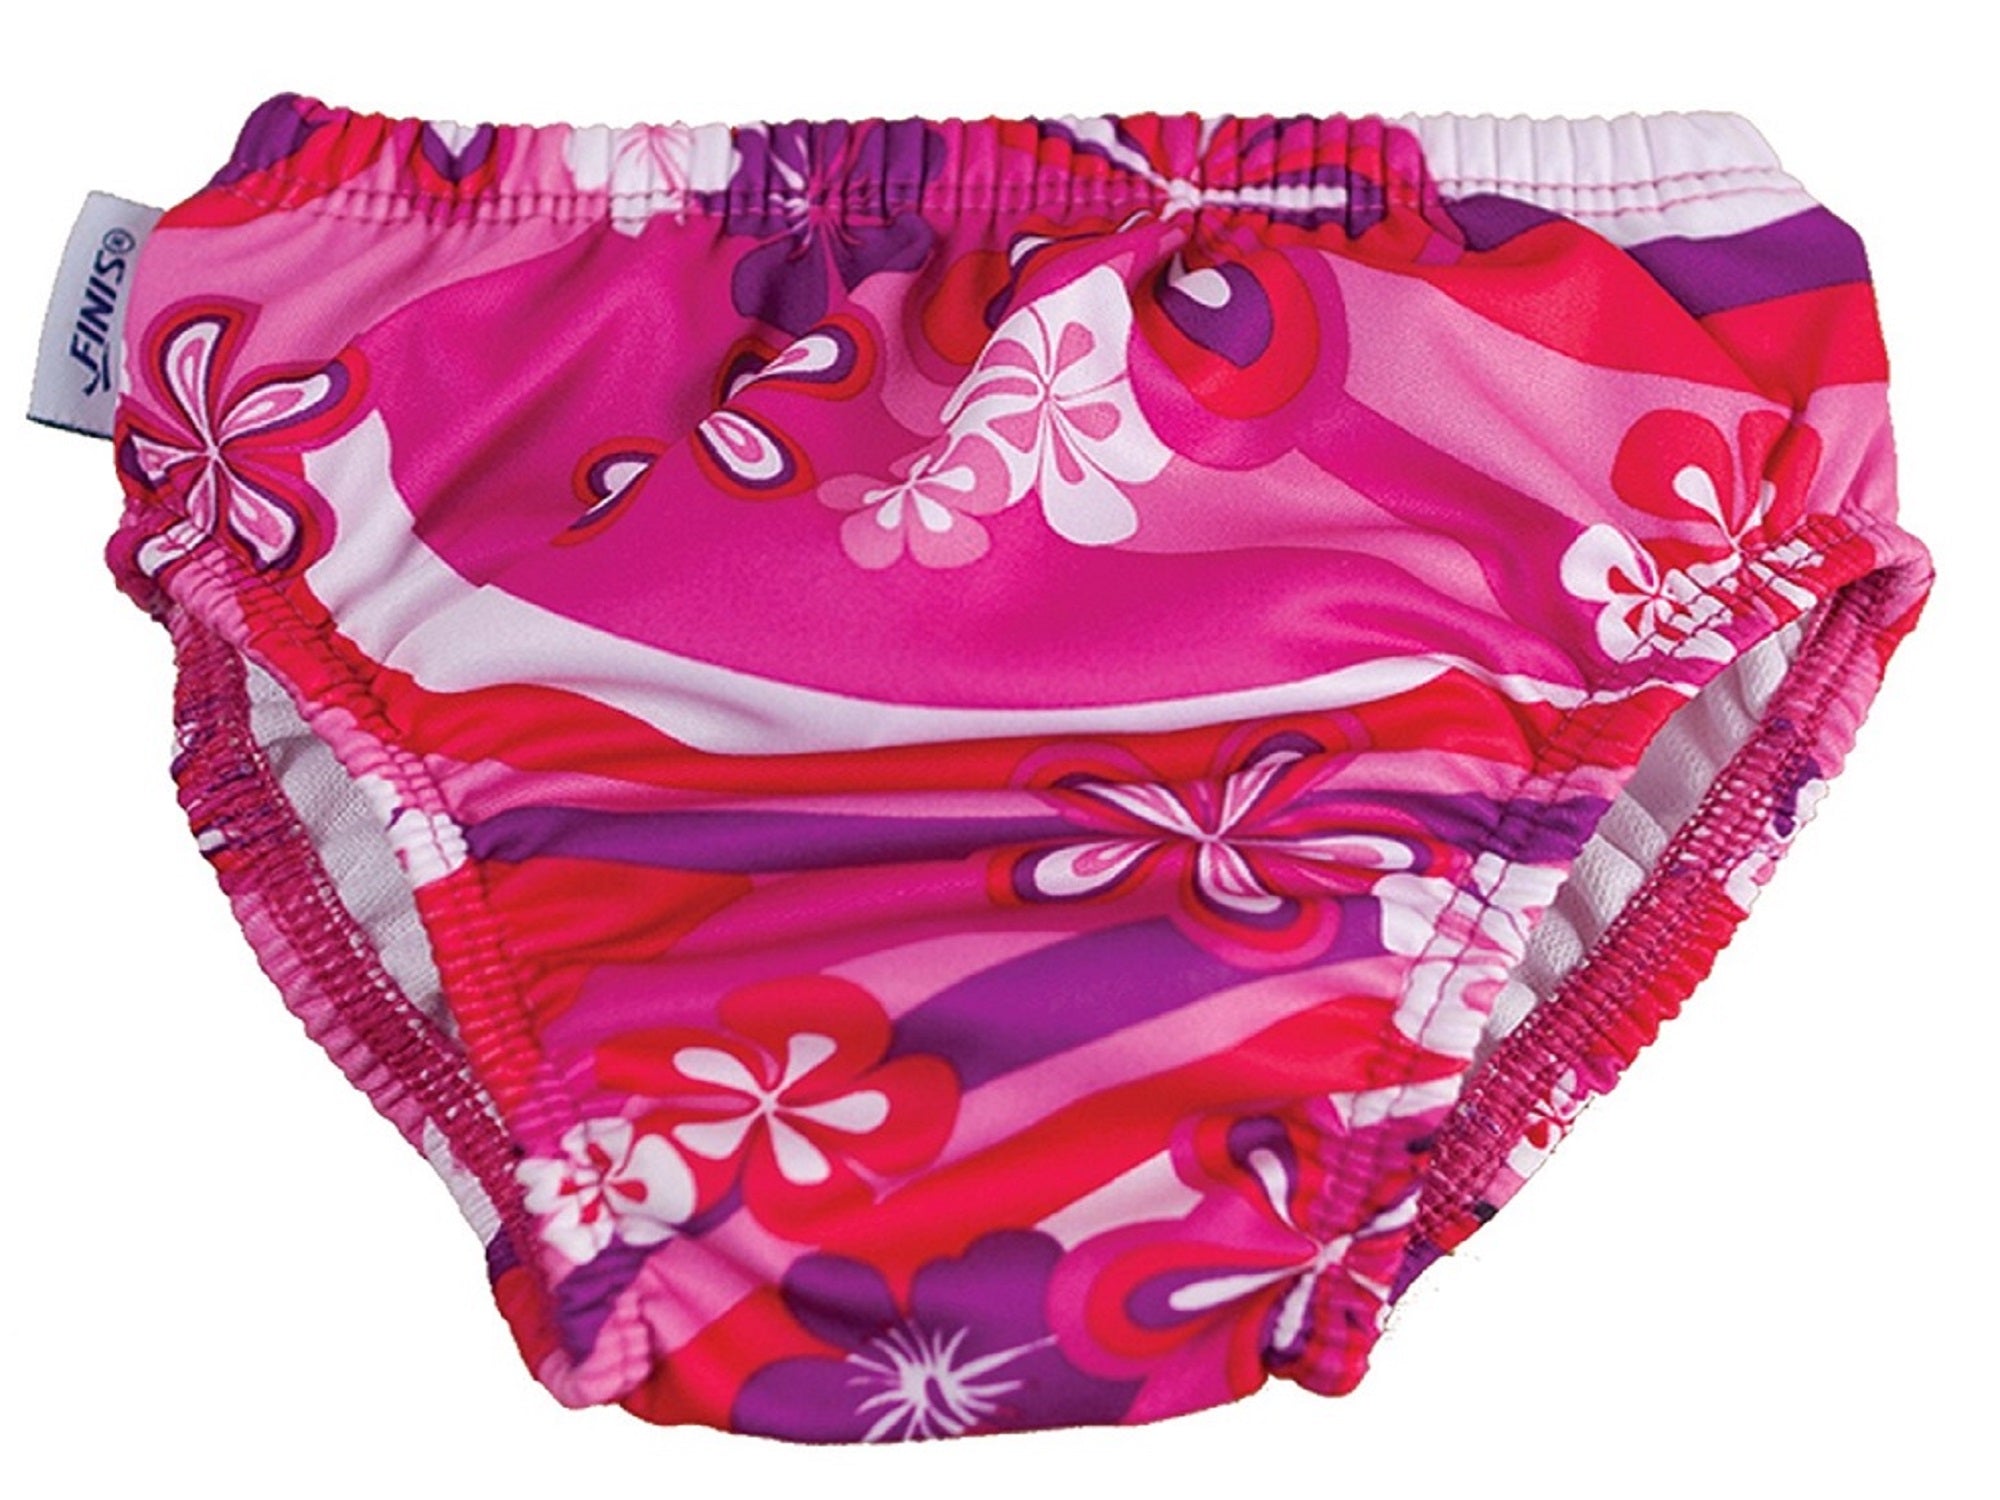 FINIS Flower Power Pink Reusable Swim Diaper, XX-Large (24-30 Months)